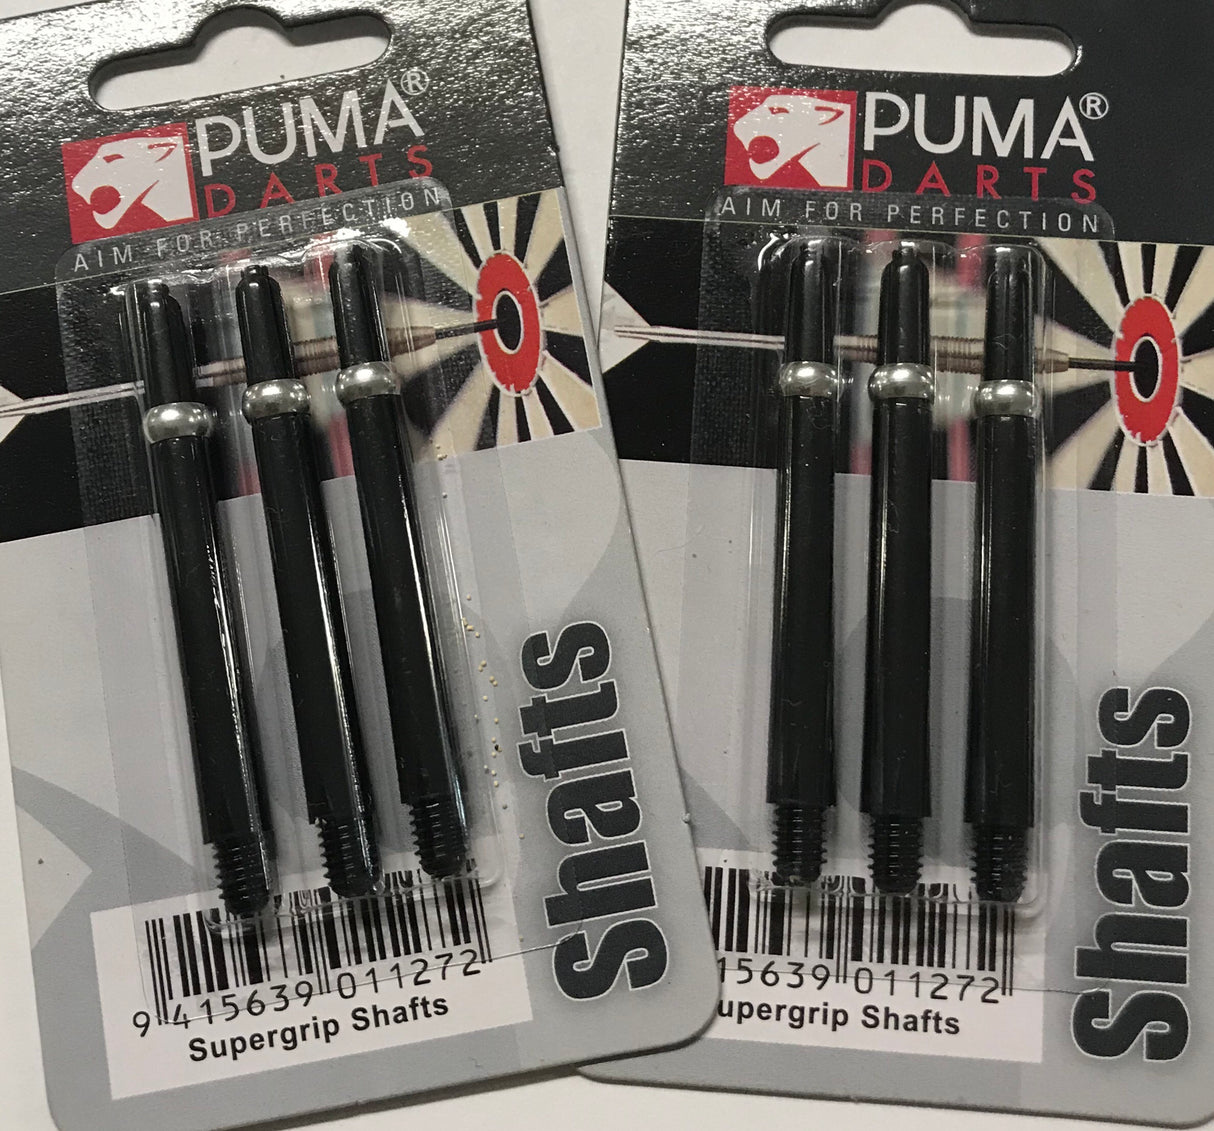 Puma Darts Supergrip Shafts